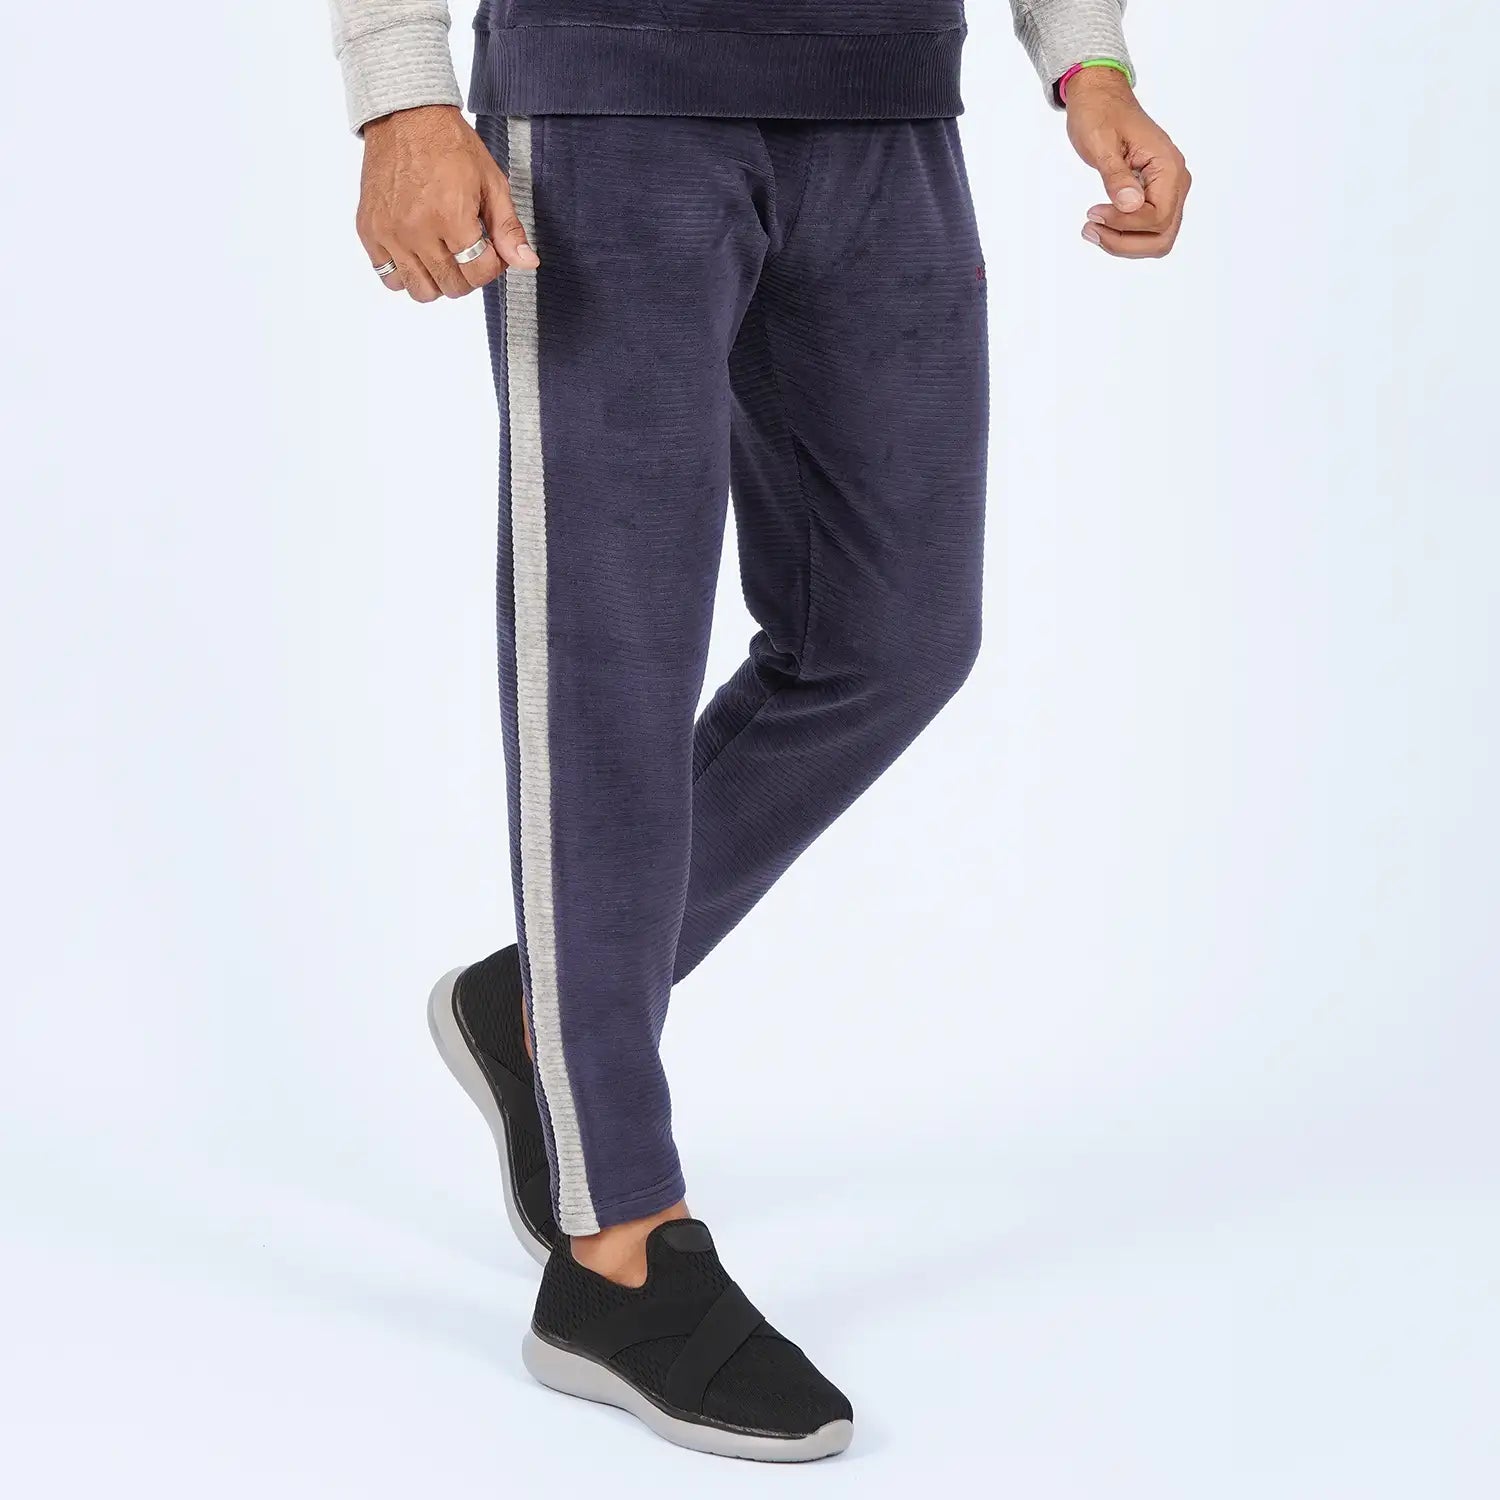 Hfyihgf Men's Cargo Pant Winter Warm Fleece Lined Sweatpants Stretch  Elastic Waist Multiple Pockets Sports Pants Fitness Trousers(Khaki,L) -  Walmart.com